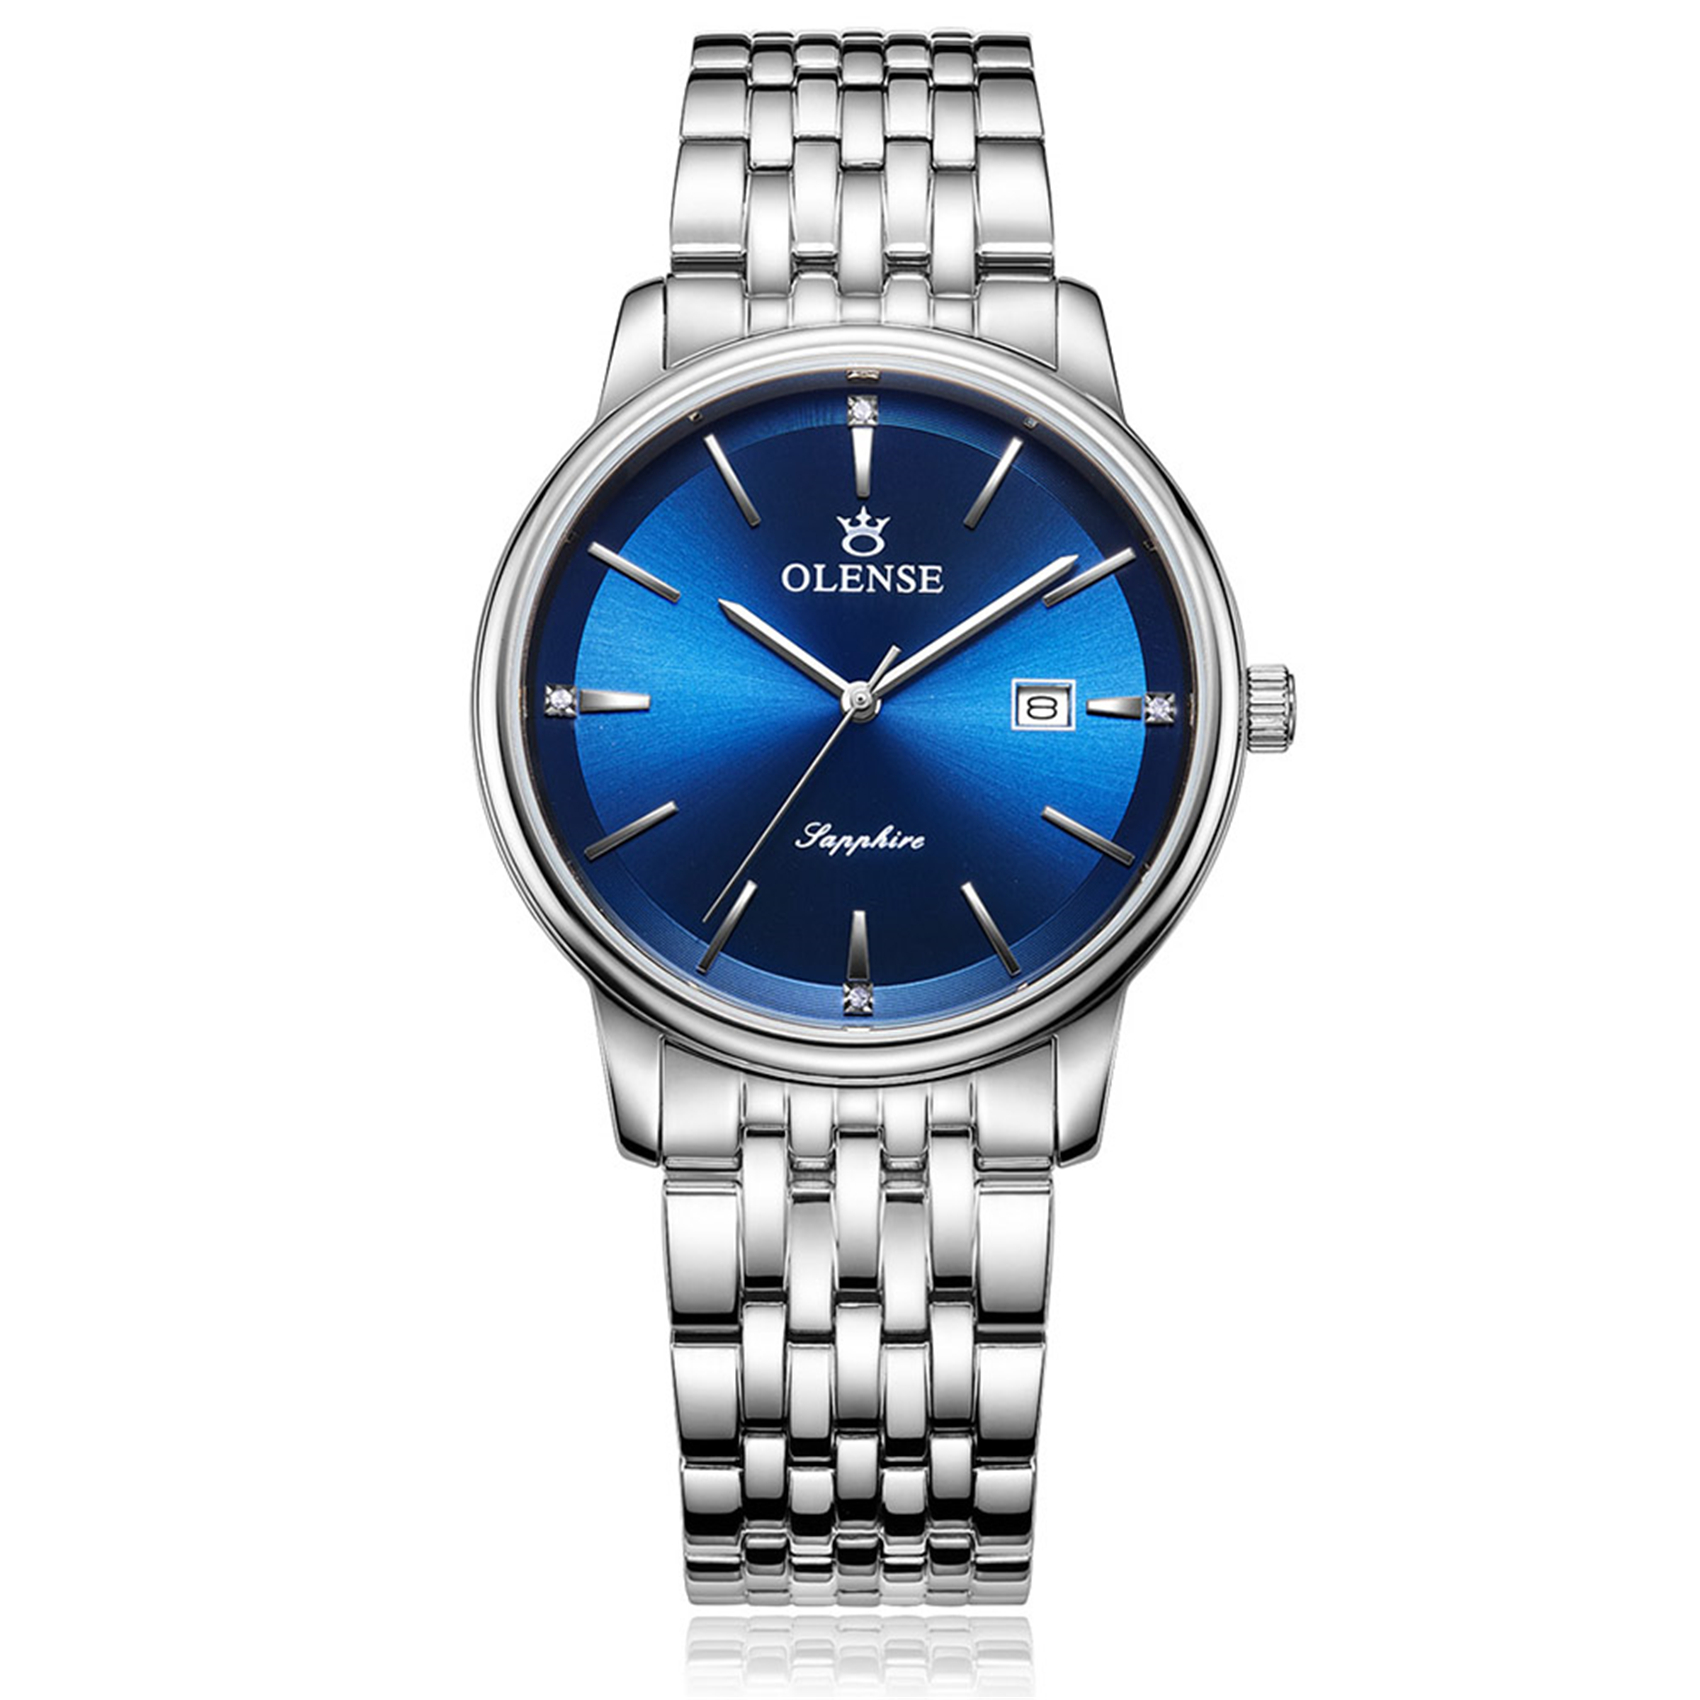 OLENSE - Classic Watch for Men, Diamond, Date, Bracelet, 40mm, Blue Dial